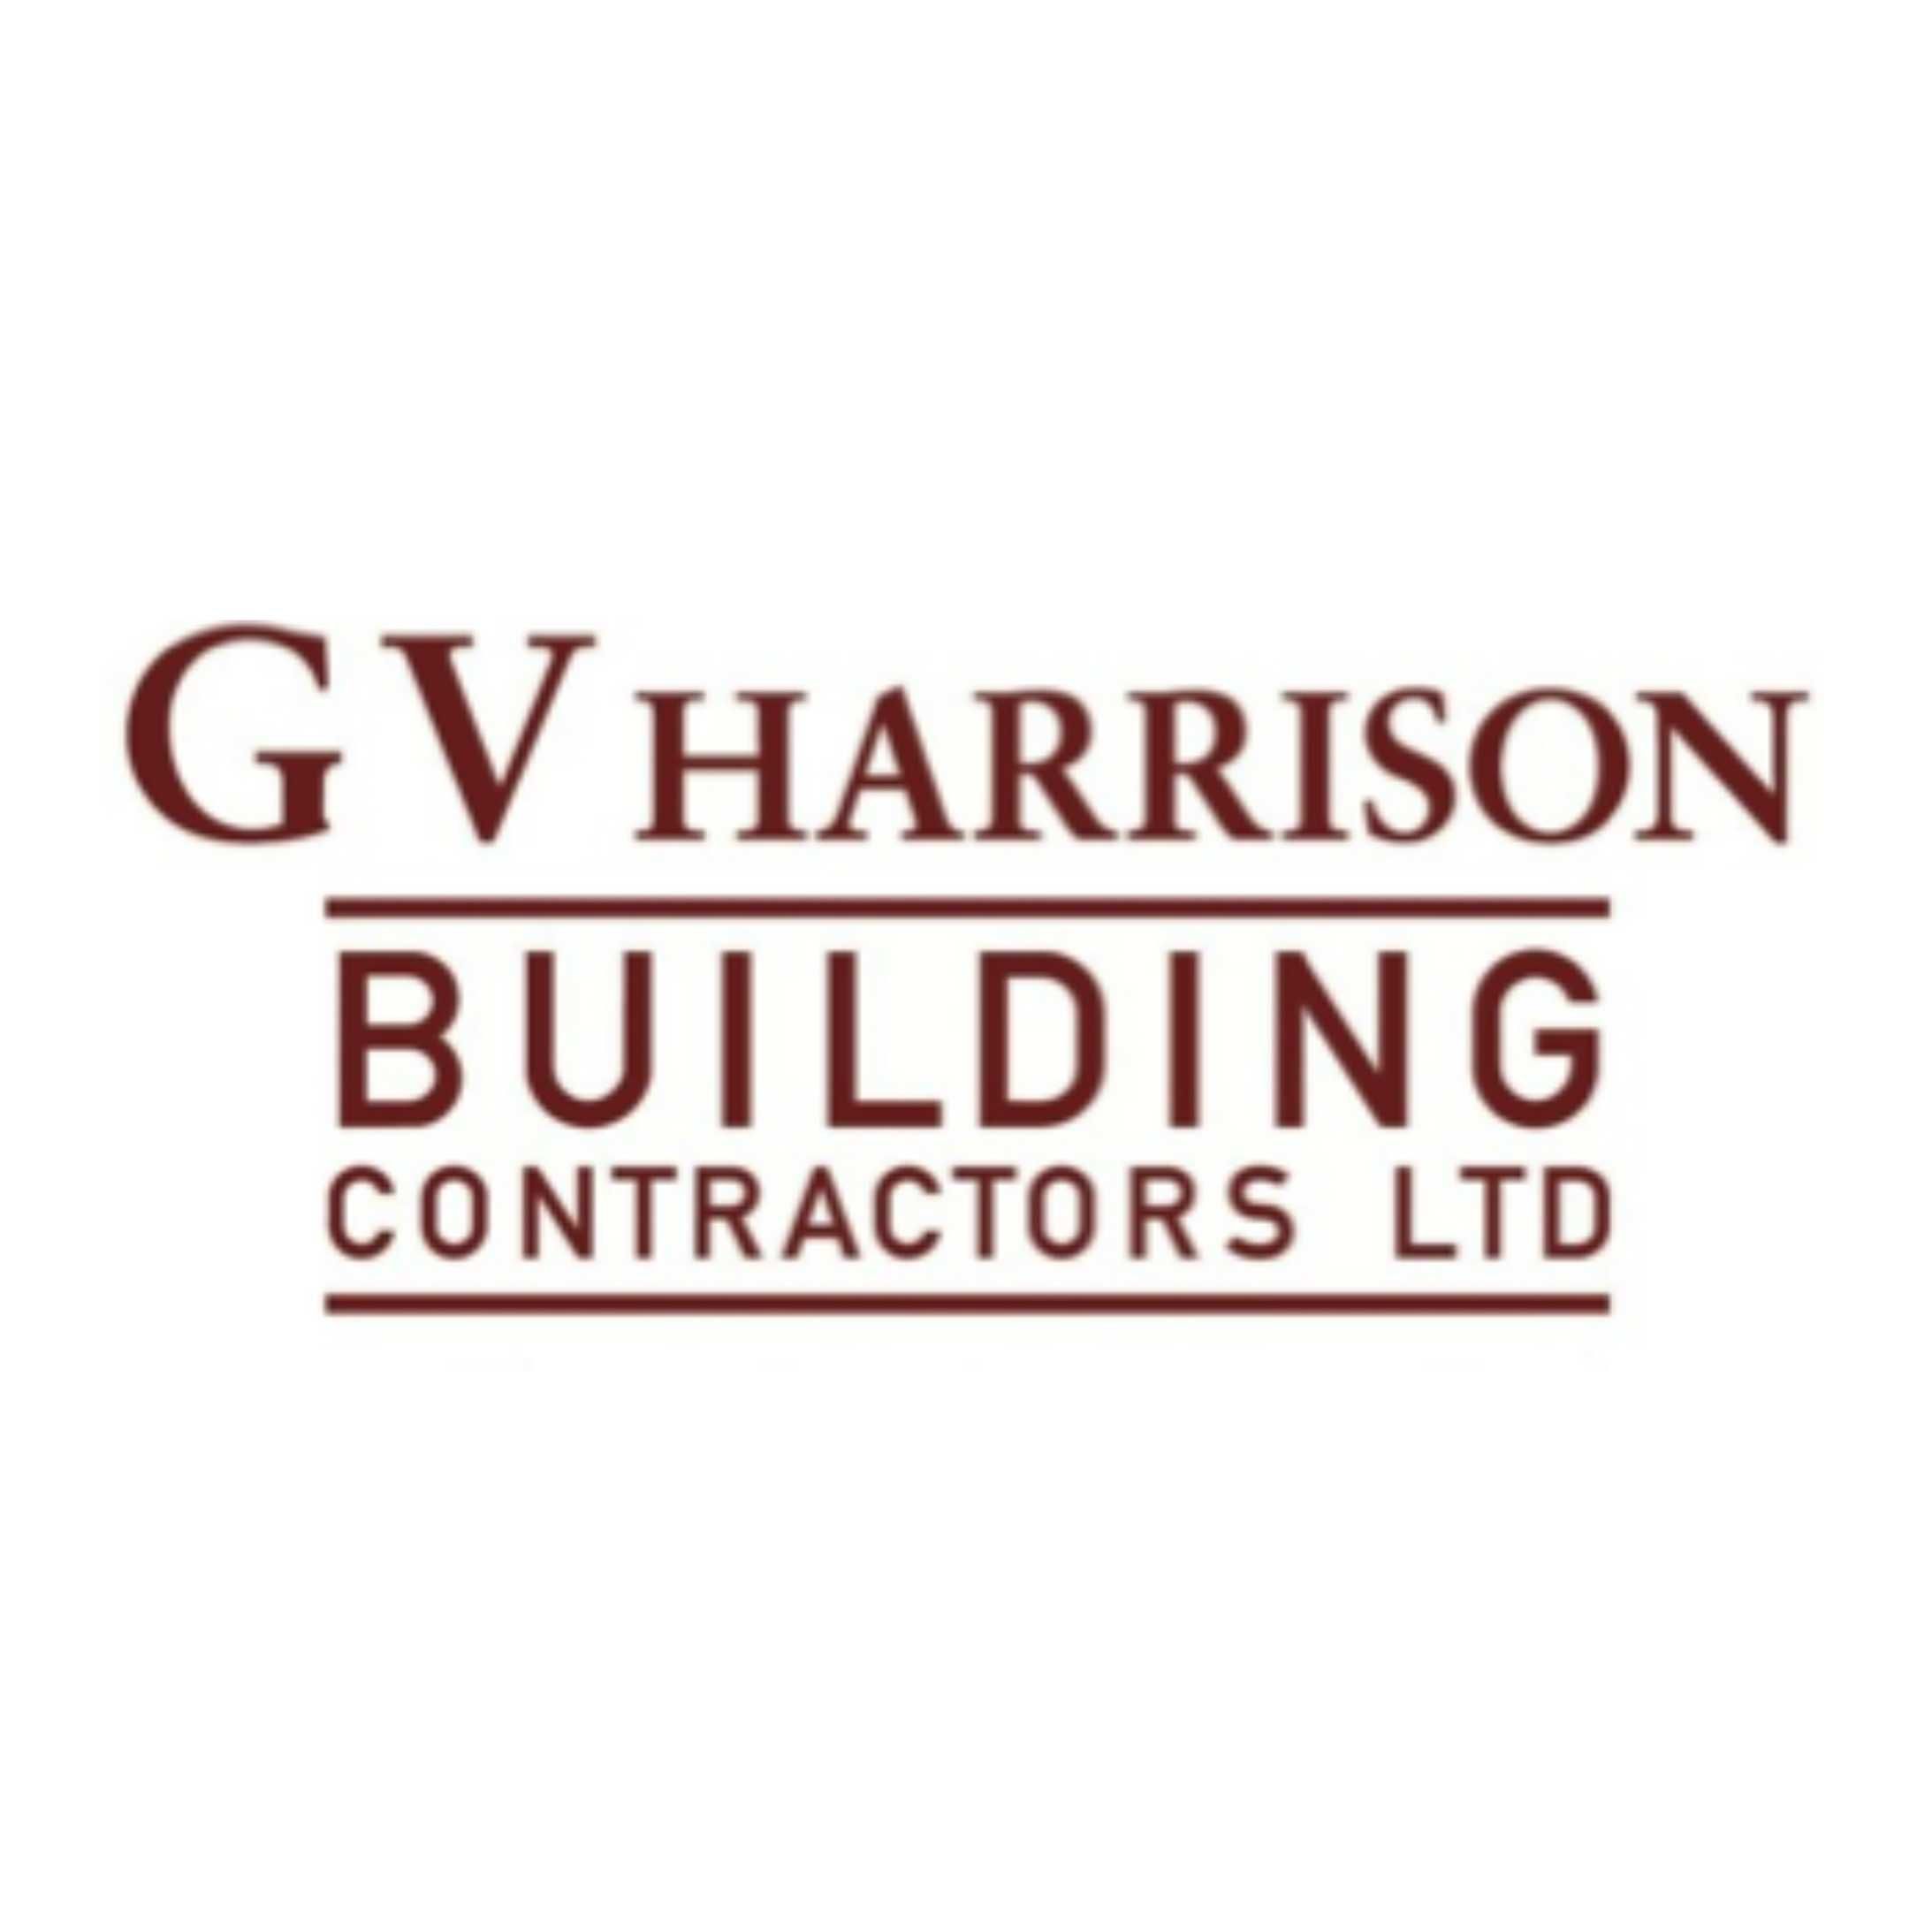 G V Harrison Building Contractors LTD